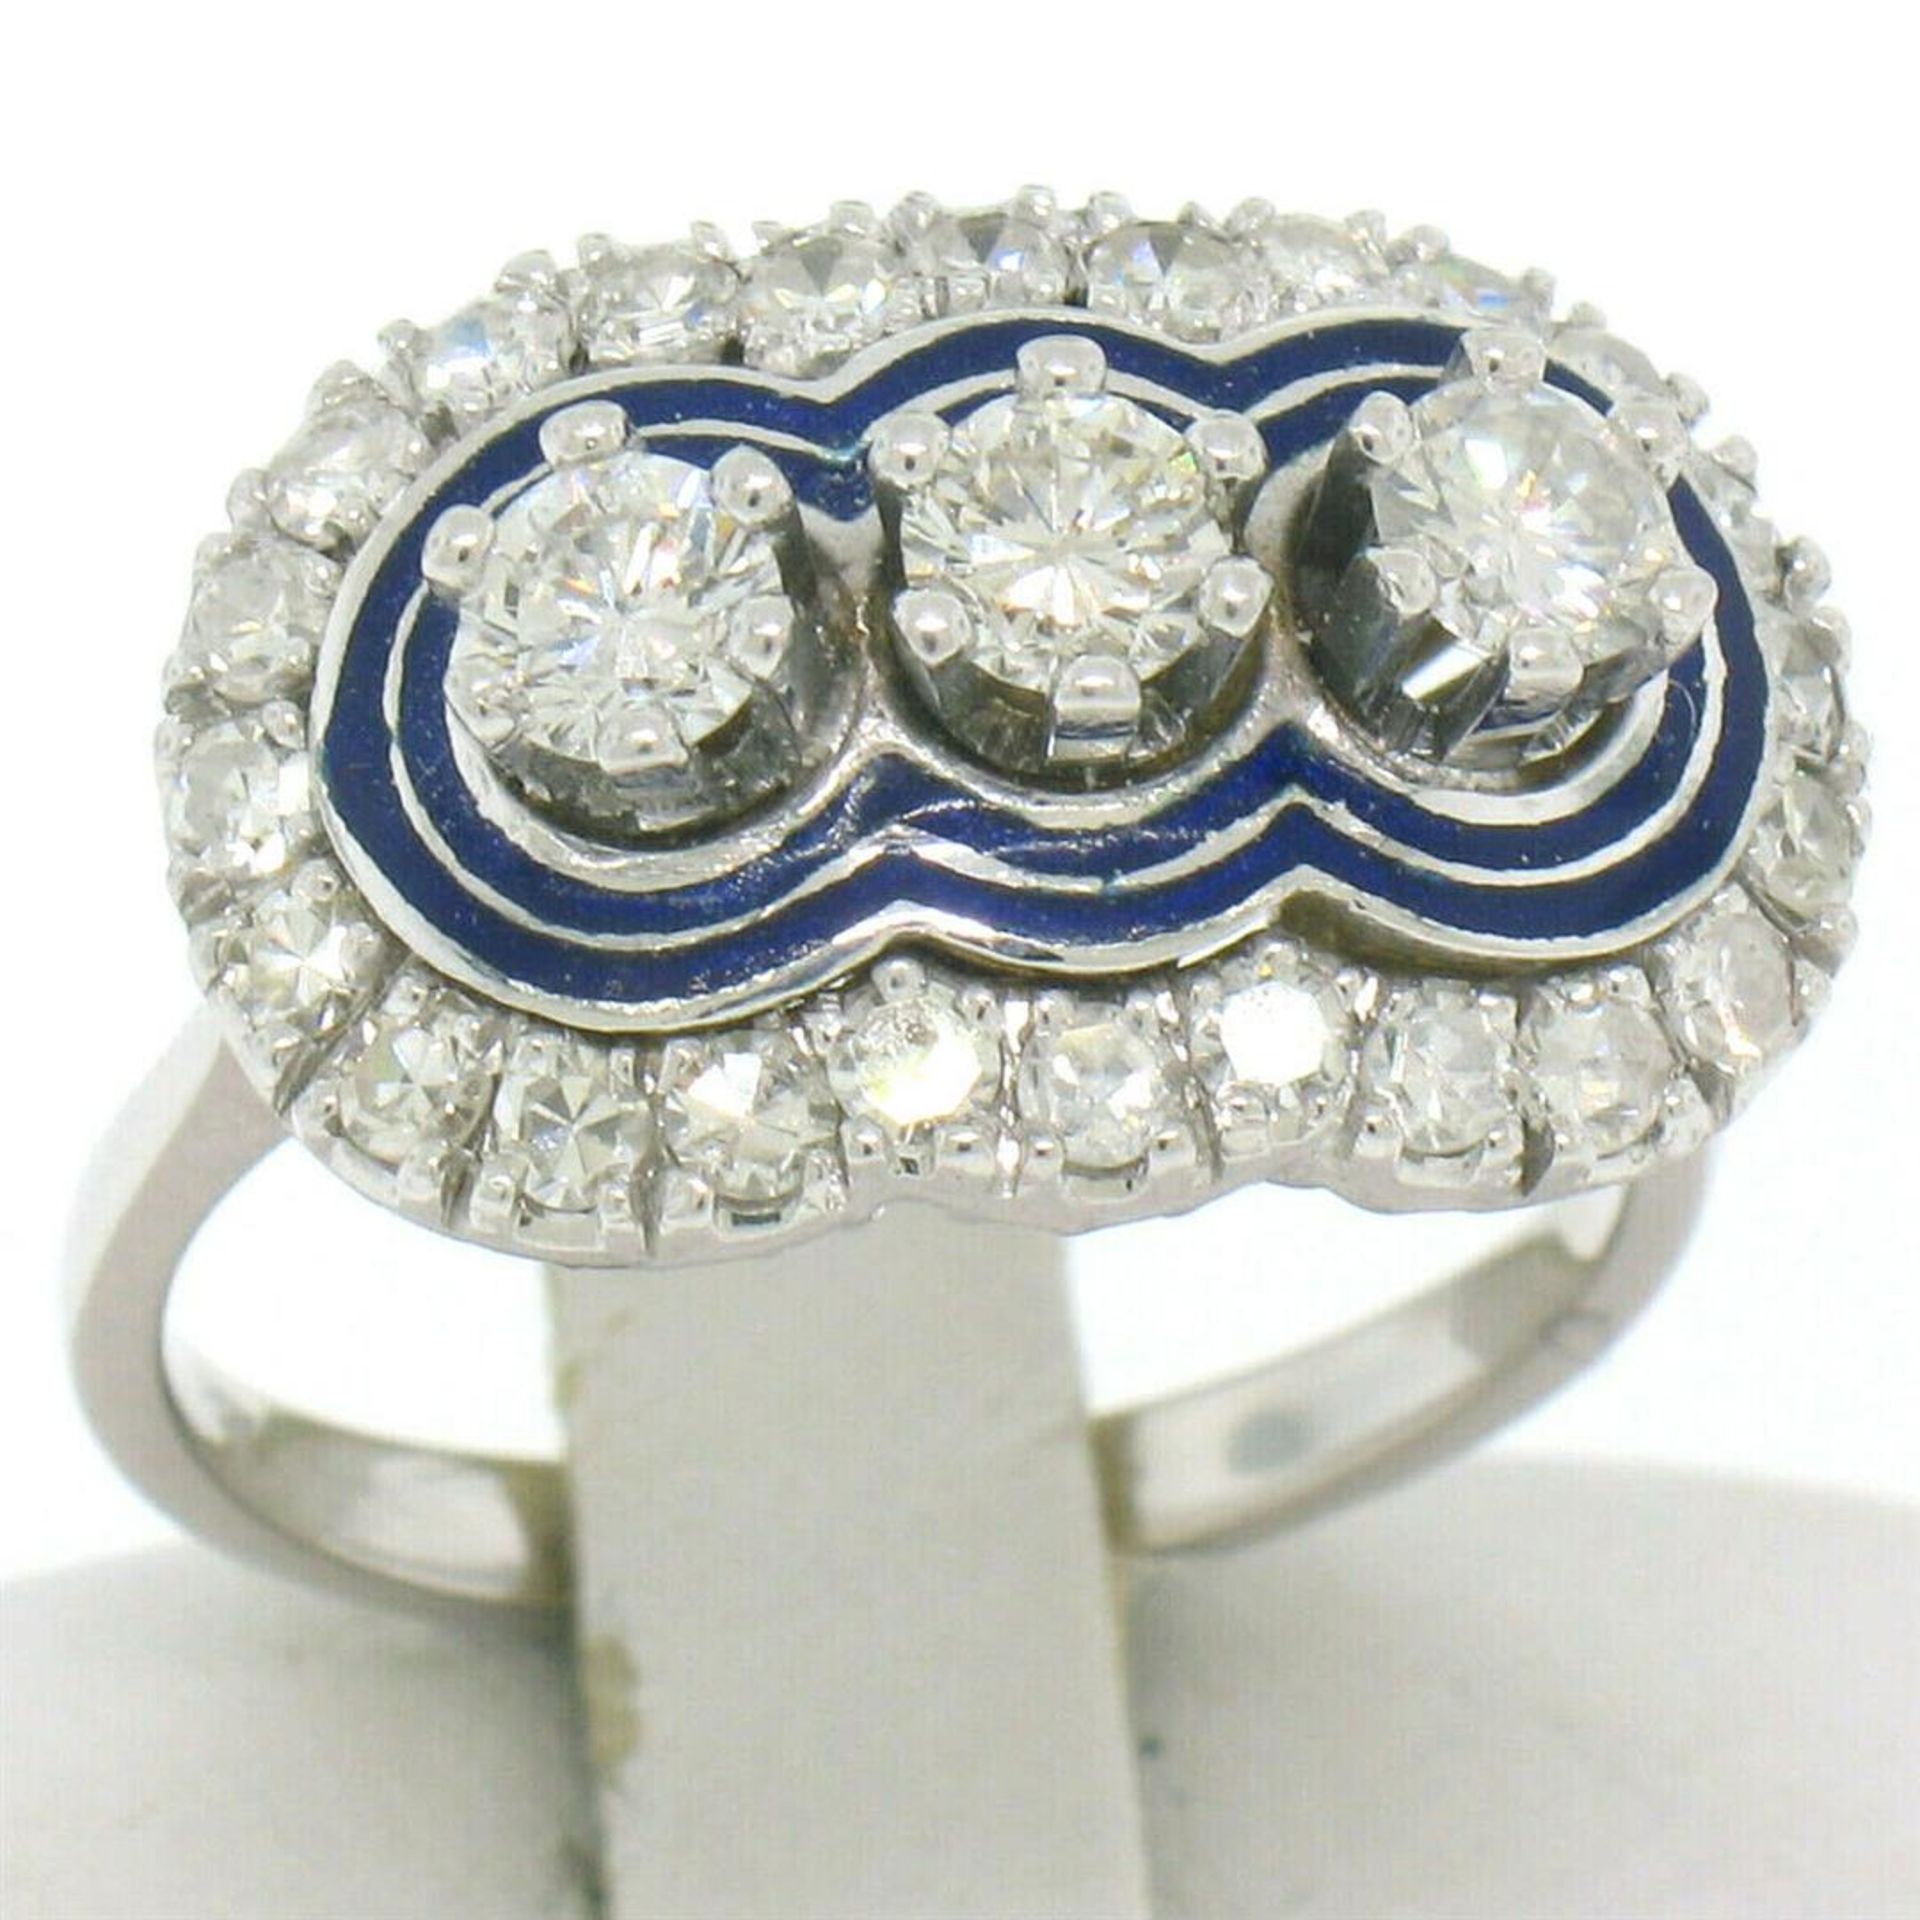 Vintage 18kt White Gold and Blue Enamel 1.15ctw Diamond Ring